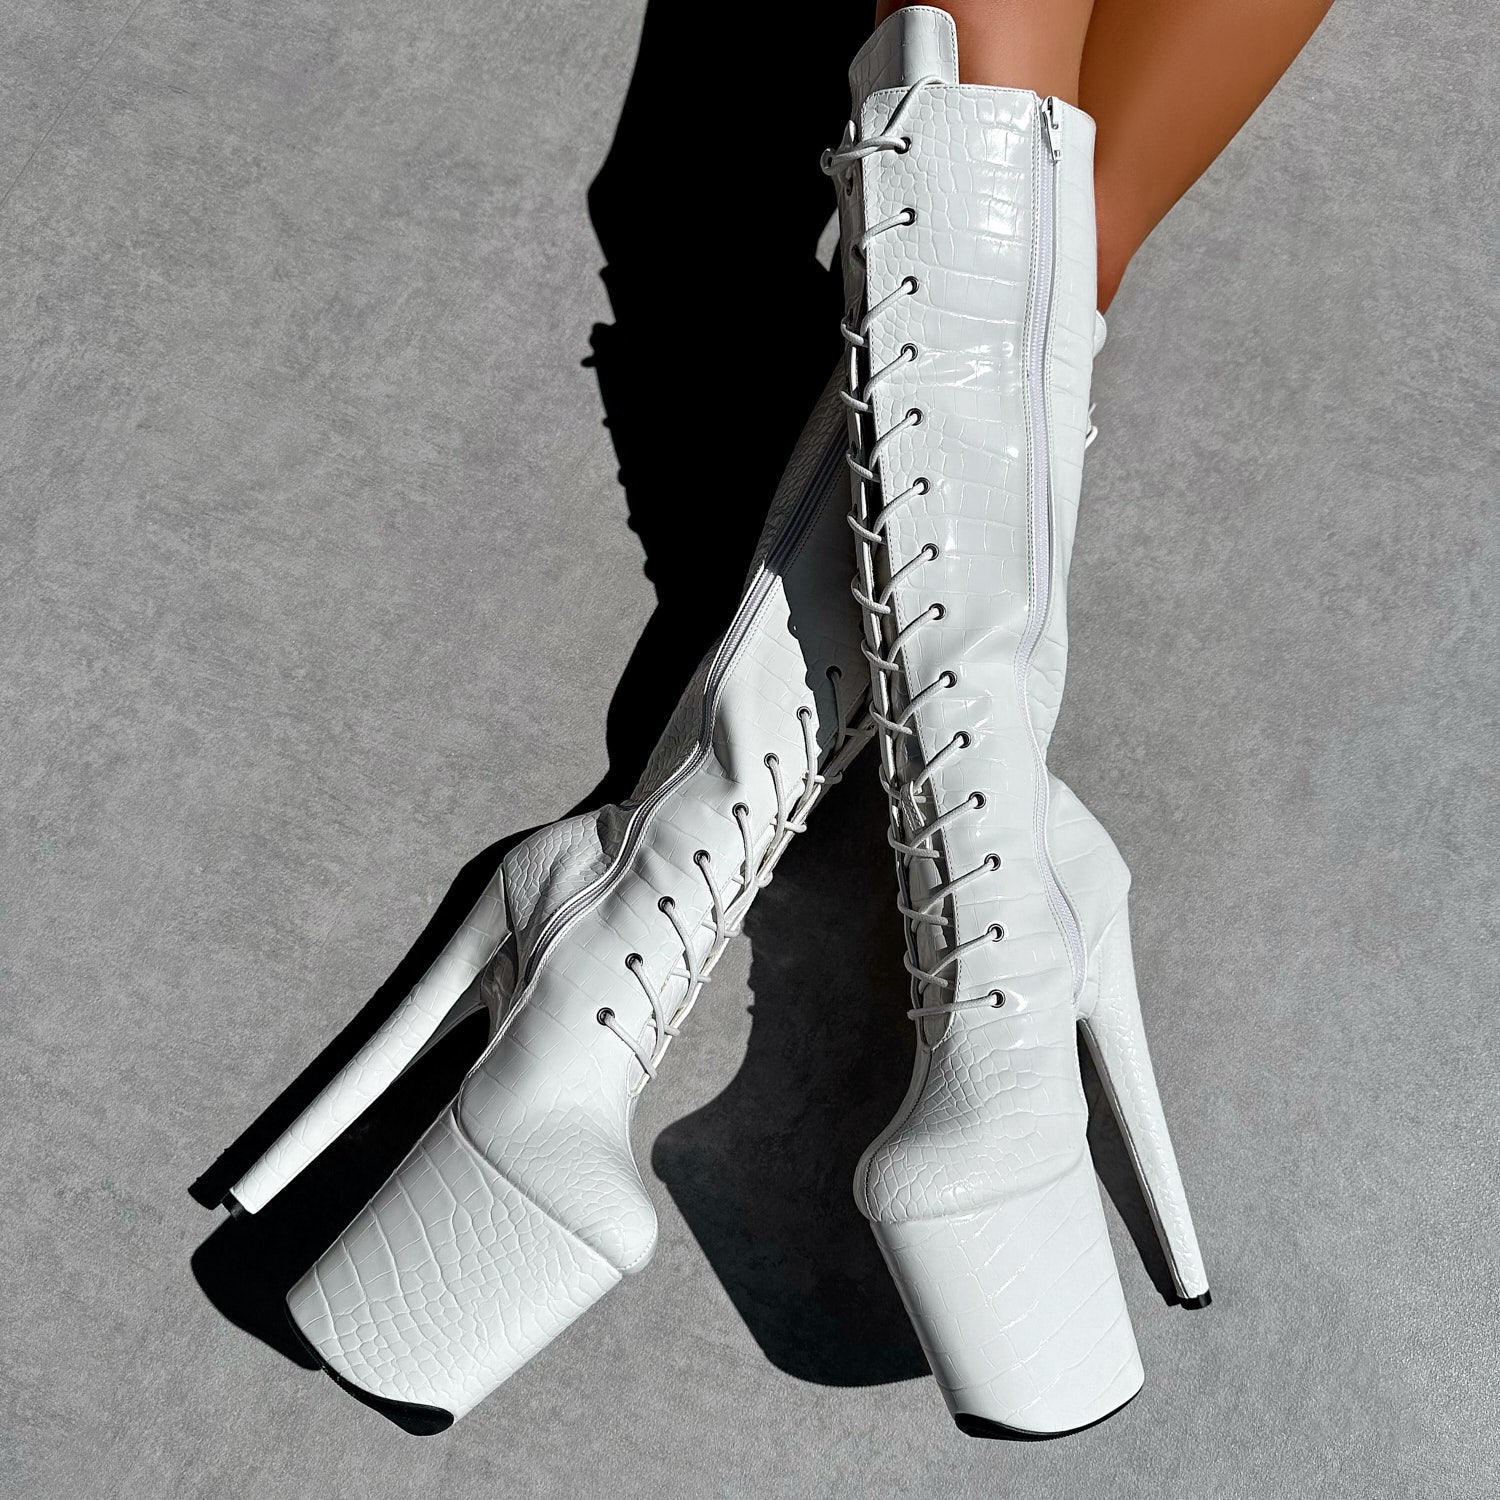 Ghosted - Knee Boot - 8INCH, stripper shoe, stripper heel, pole heel, not a pleaser, platform, dancer, pole dance, floor work